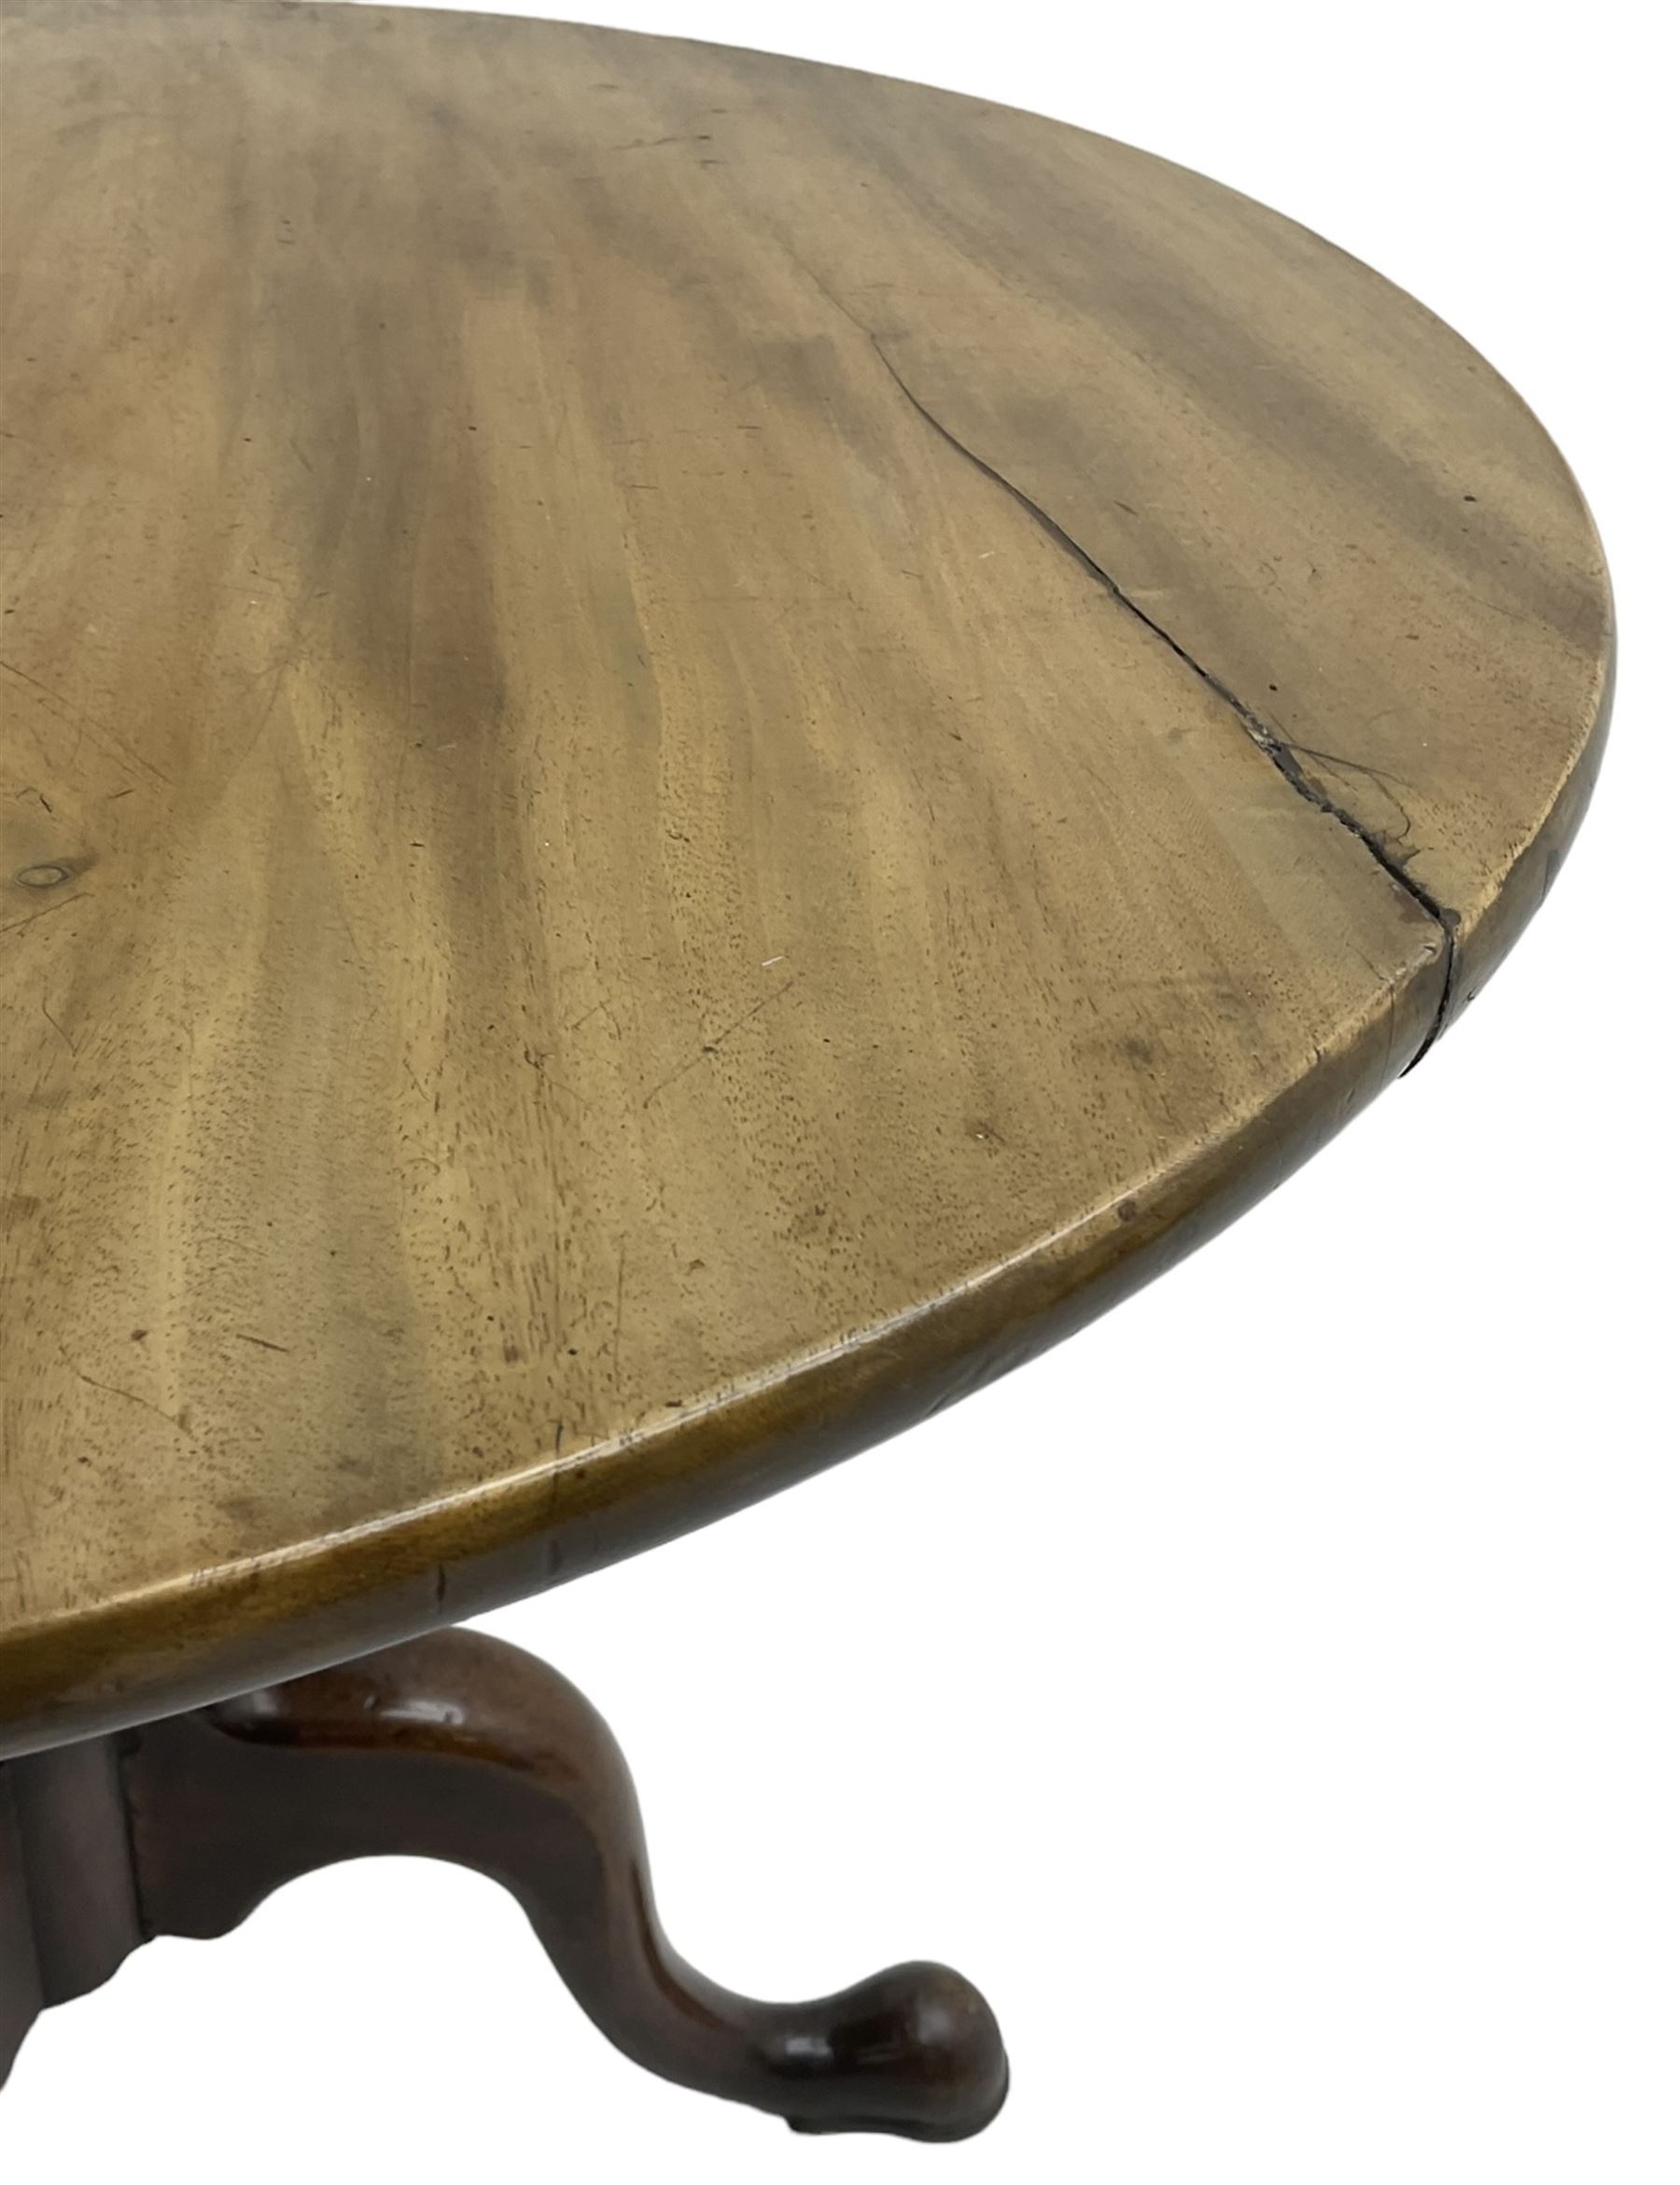 19th century mahogany pedestal table - Image 2 of 6